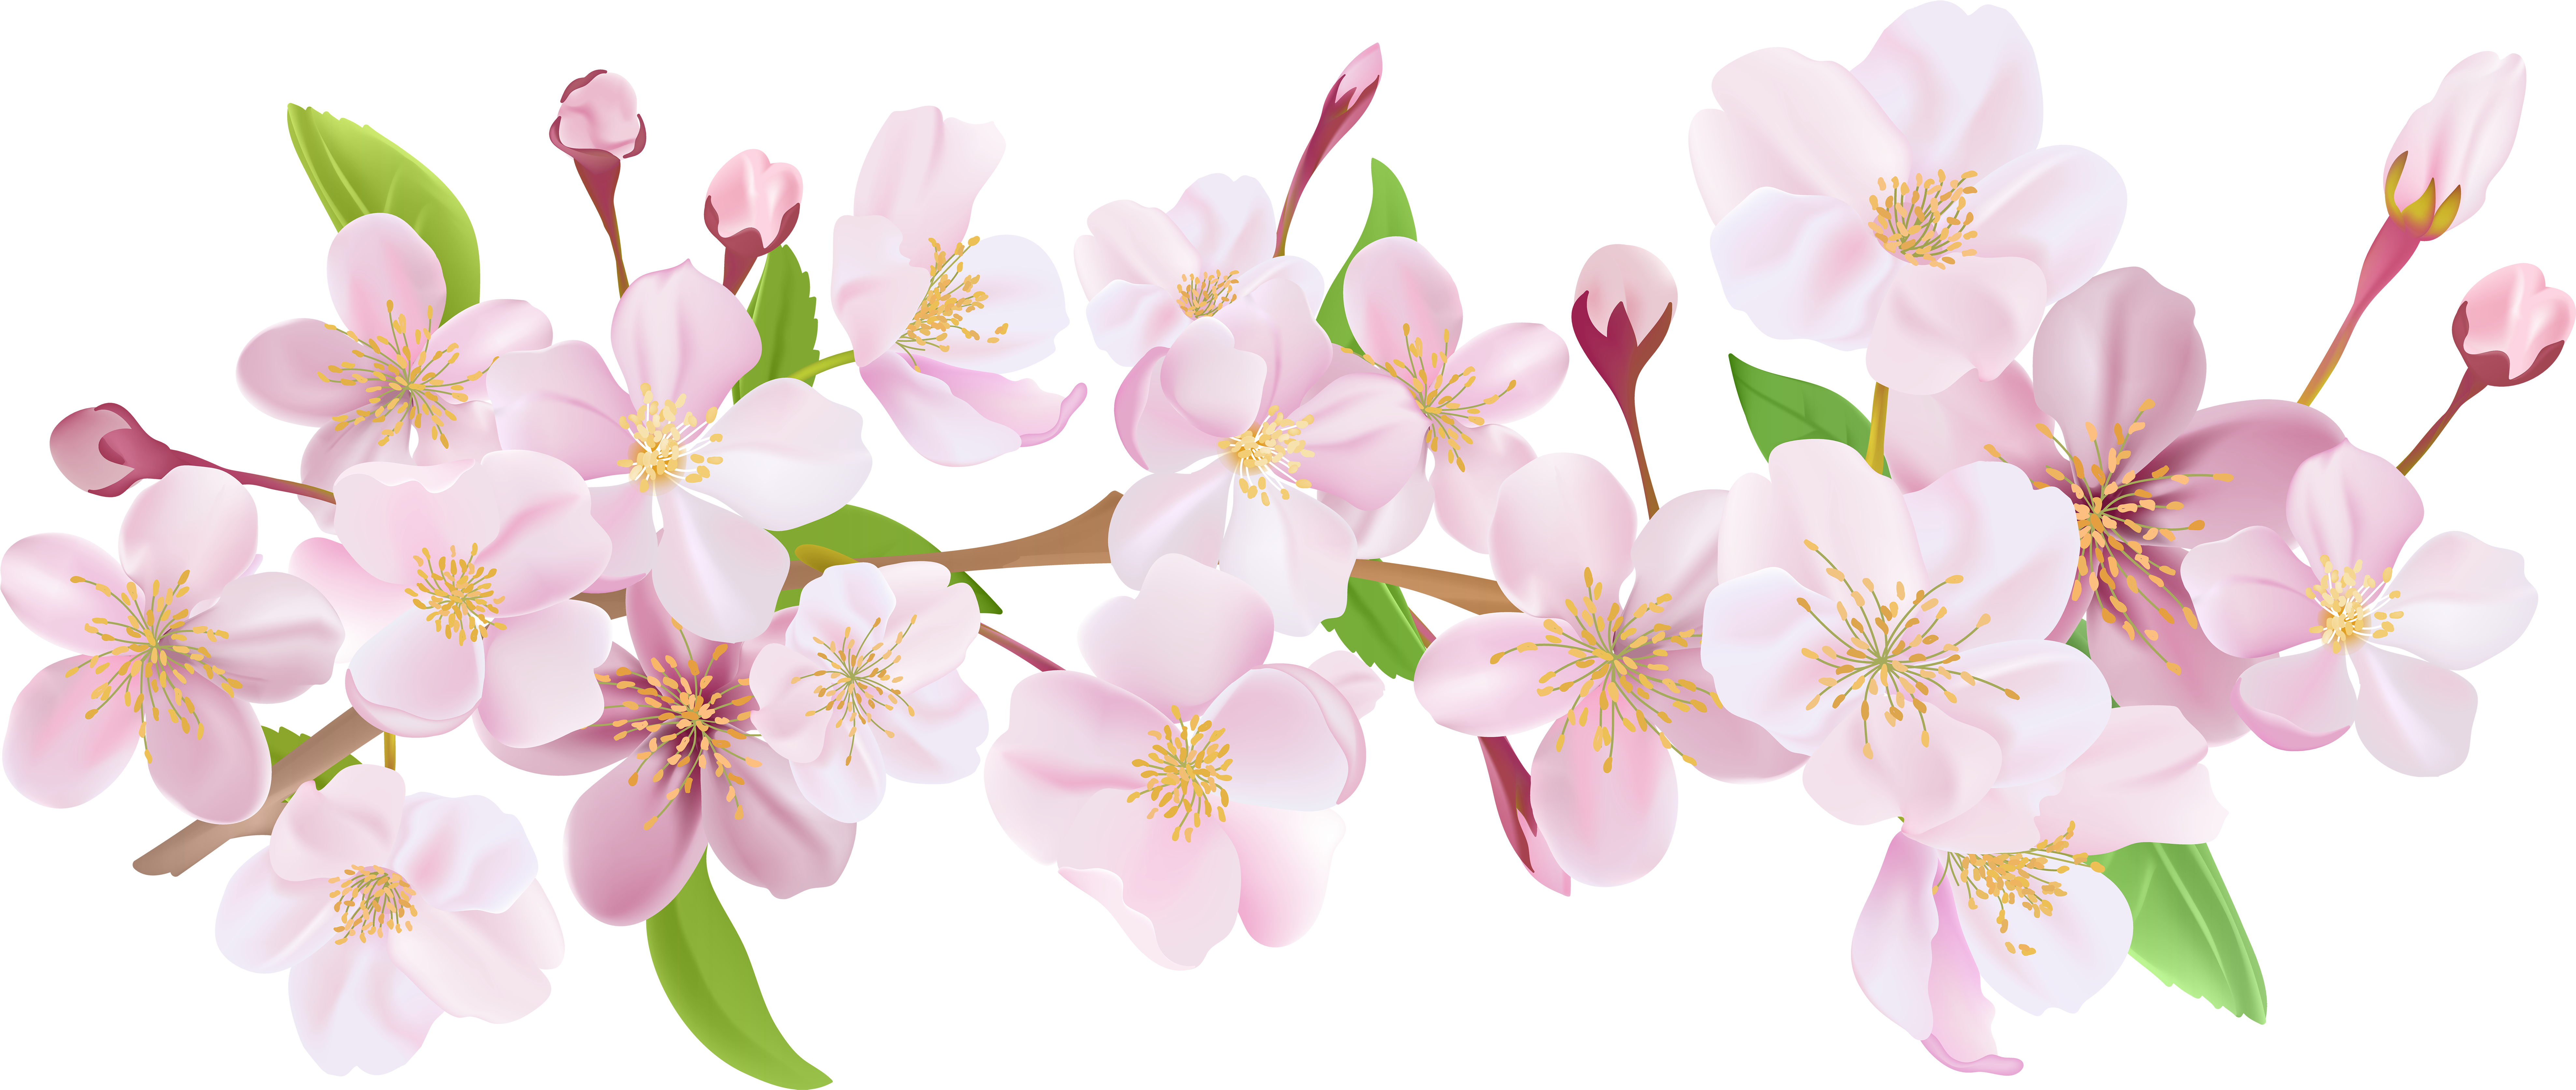 50+ Cherry Blossom Transparent Background Flower Png - さととめ